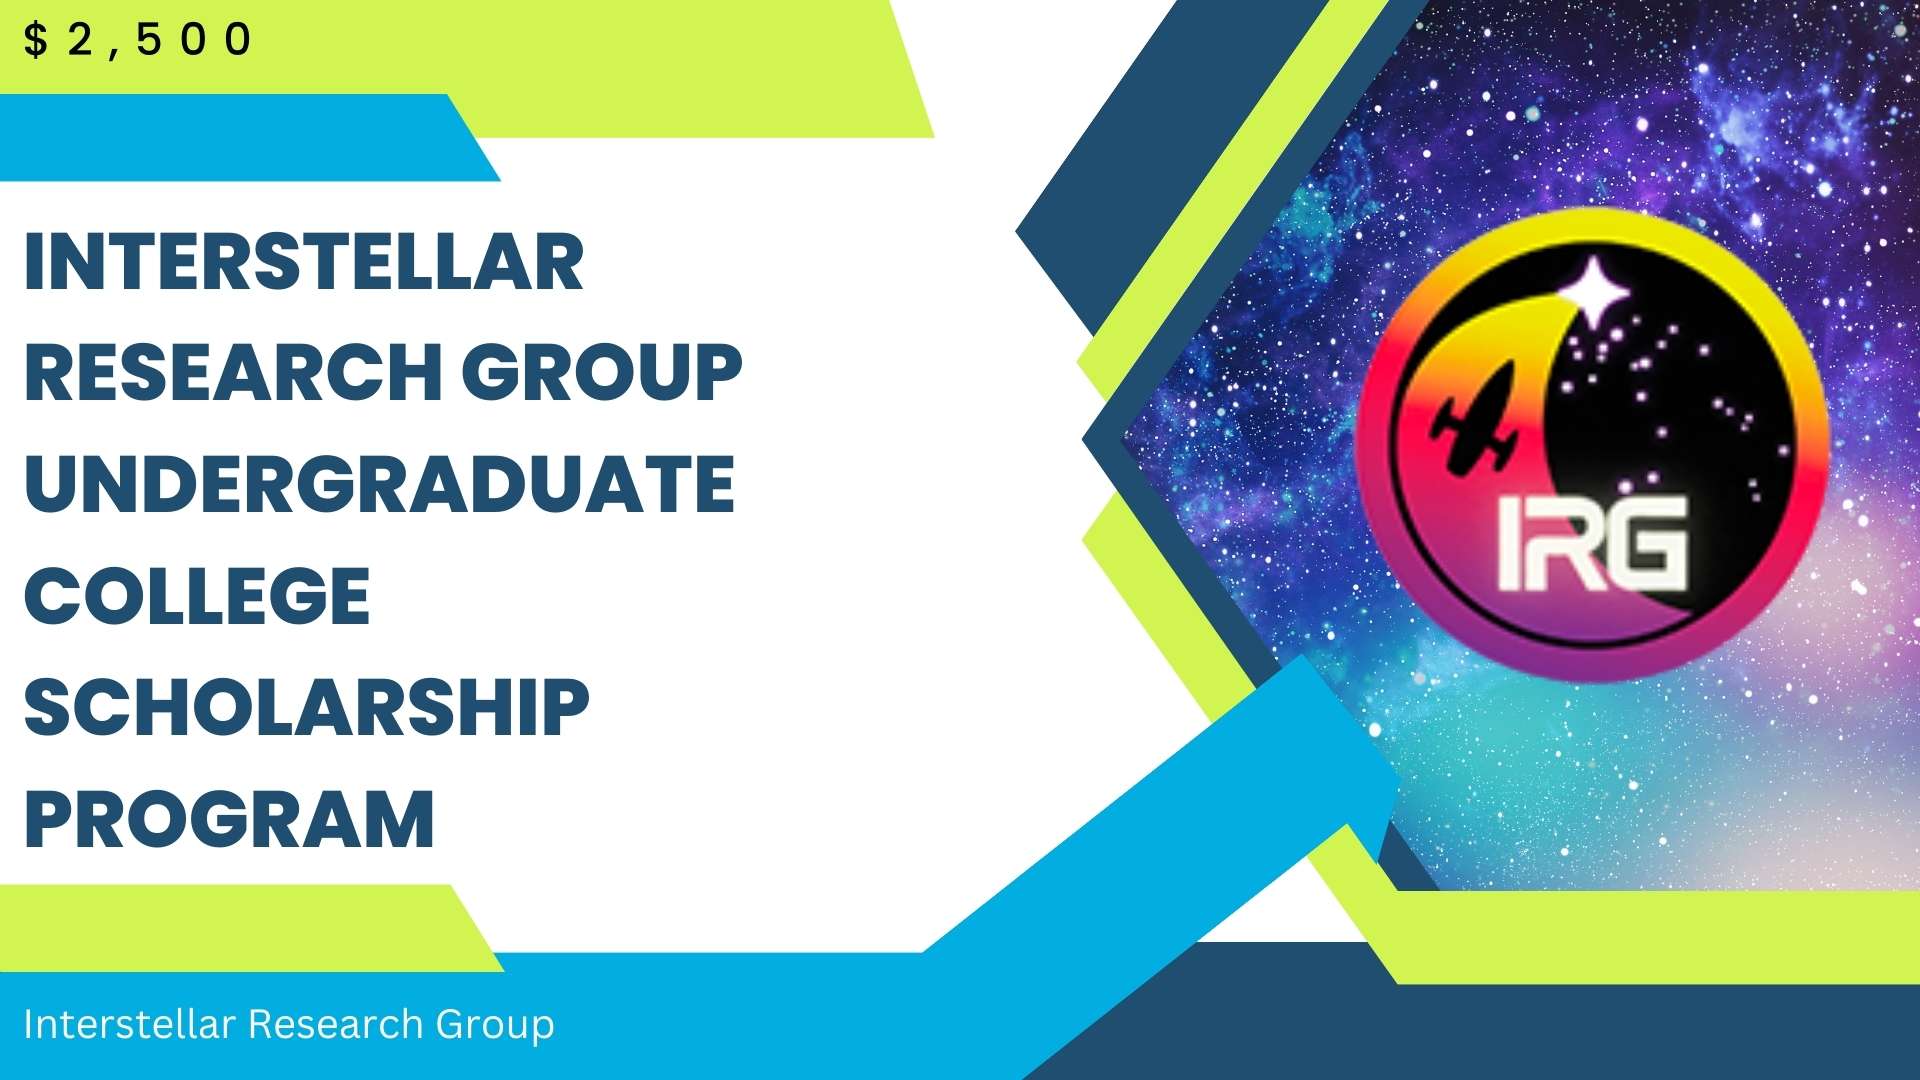 Interstellar Research Group Undergraduate College Scholarship Program